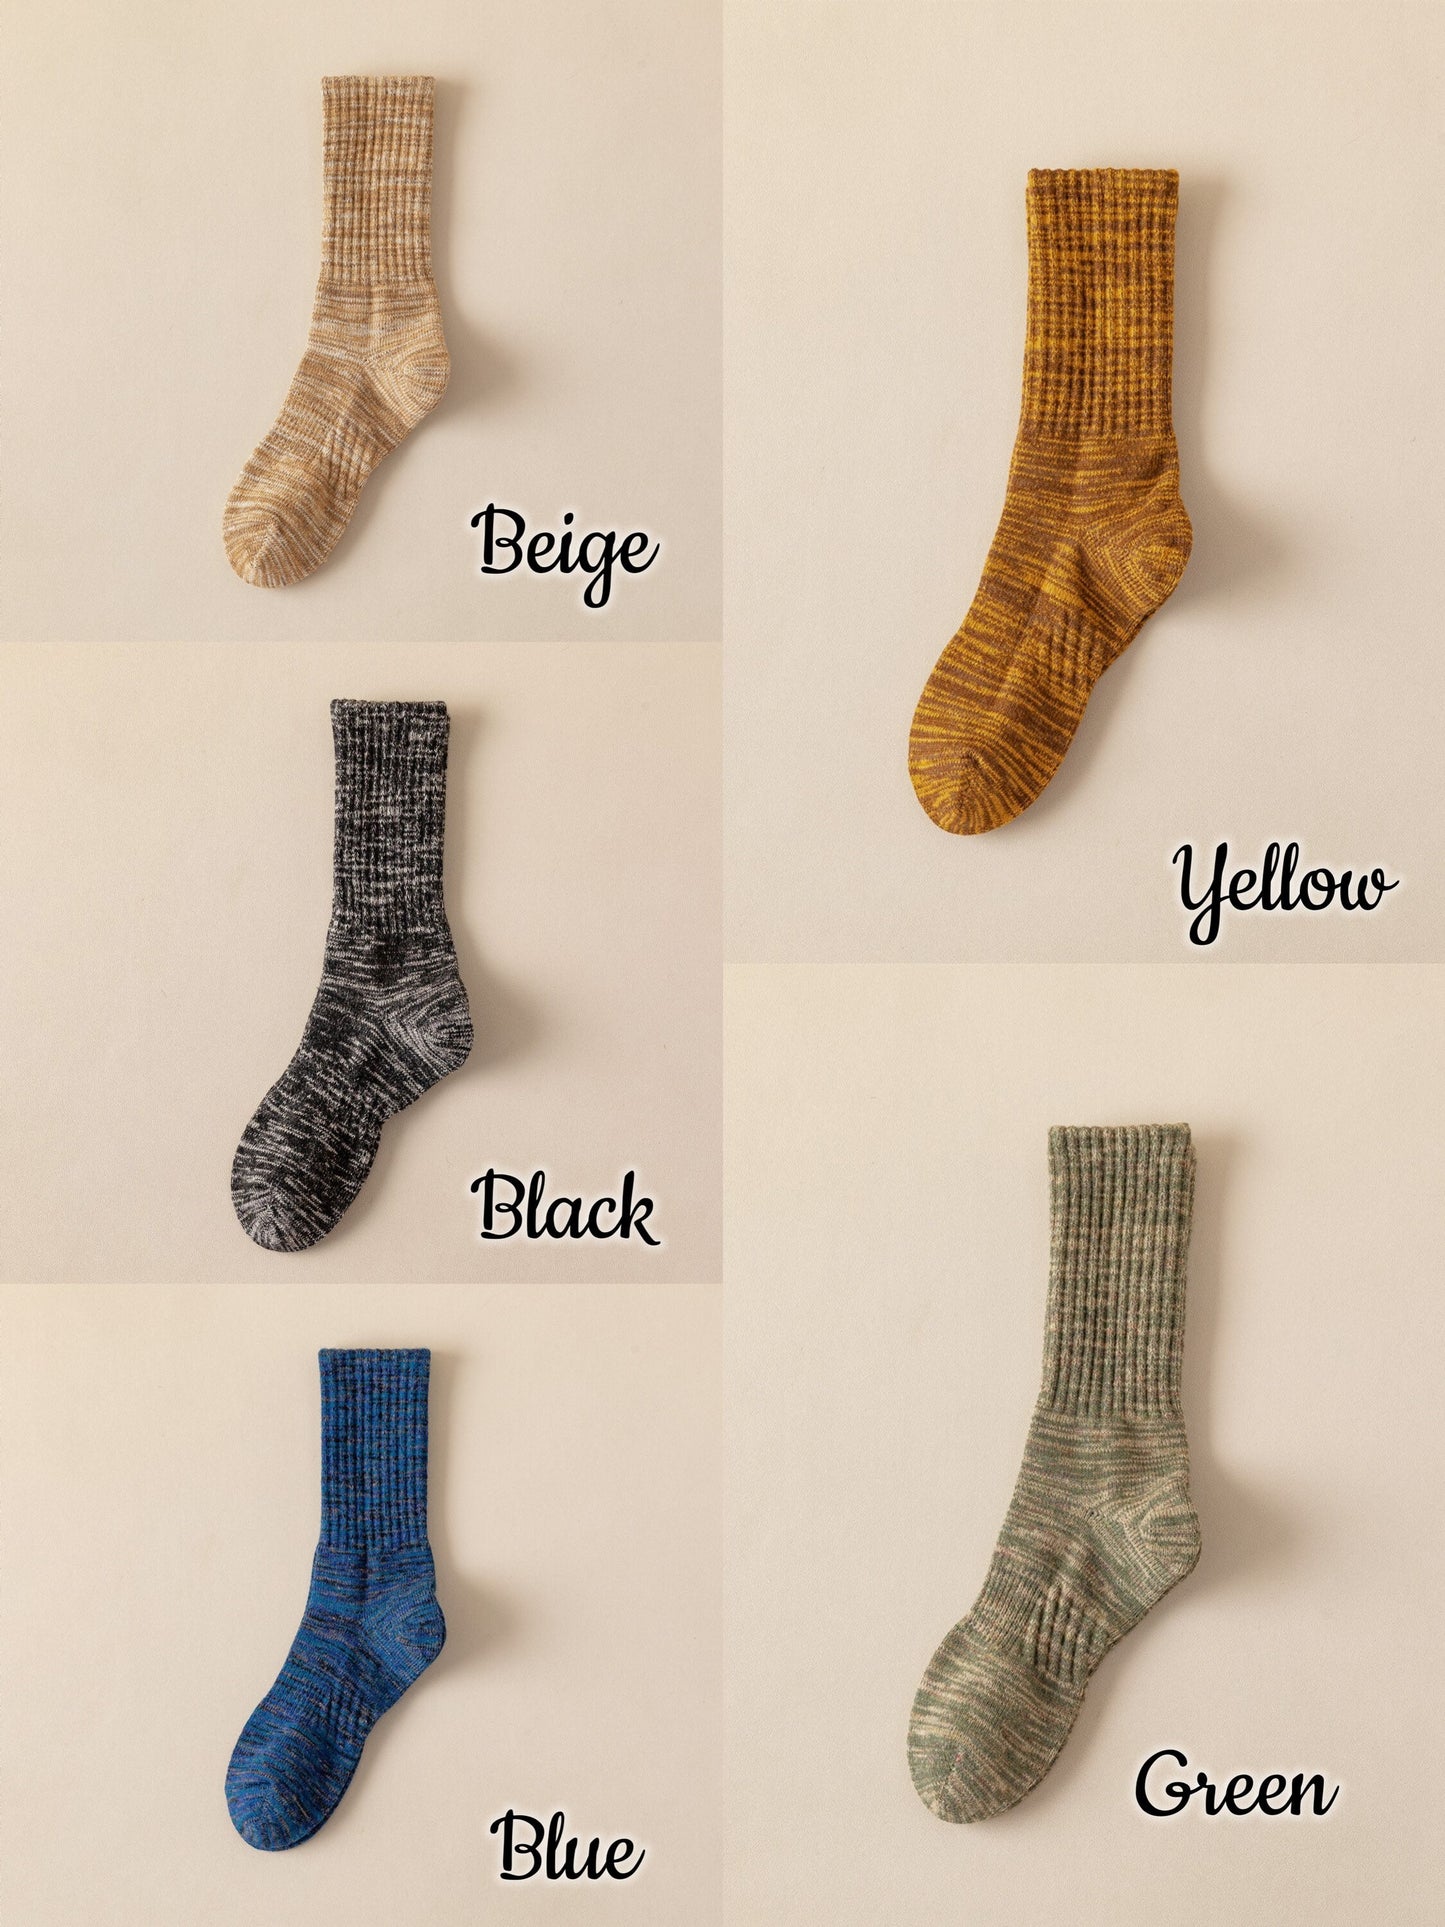 Miss June’s| Men’s socks | 1 Pair Wool blended socks|winter| Warm | Soft | High quality| Gift idea | Thanksgiving |Christmas| Cozy |Skiing